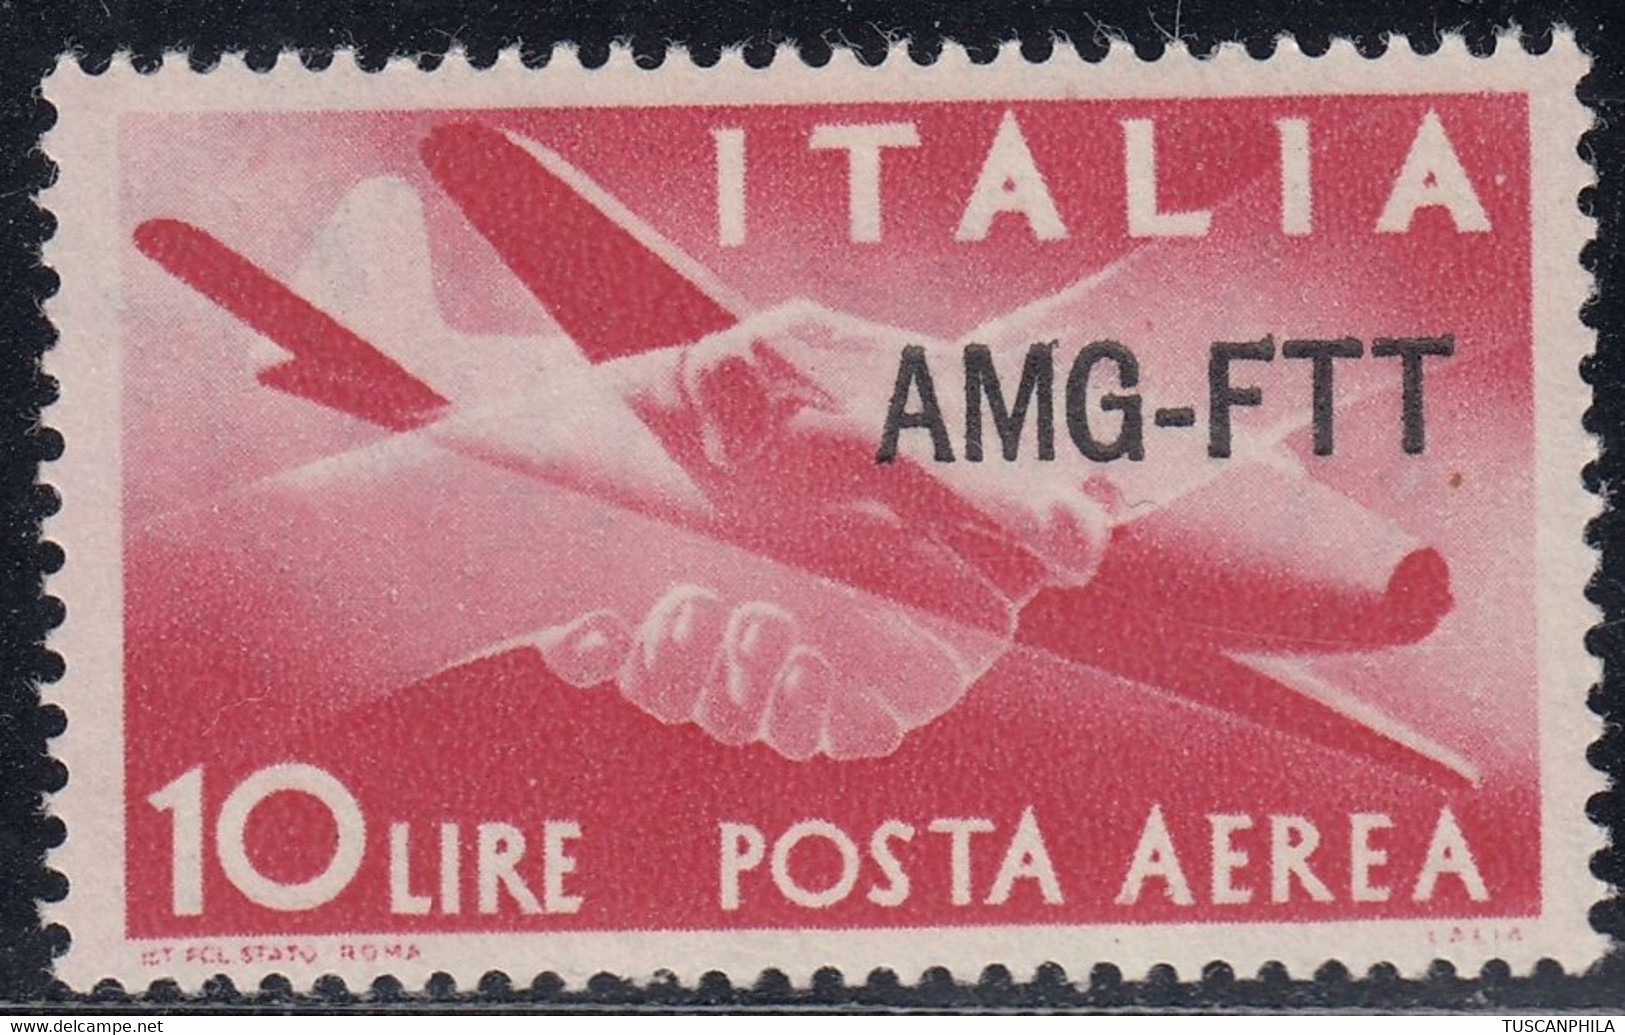 Trieste AMG-FTT Posta Aerea Varietà Decalco Sass. A20h MNH** Cv. 12 - Airmail